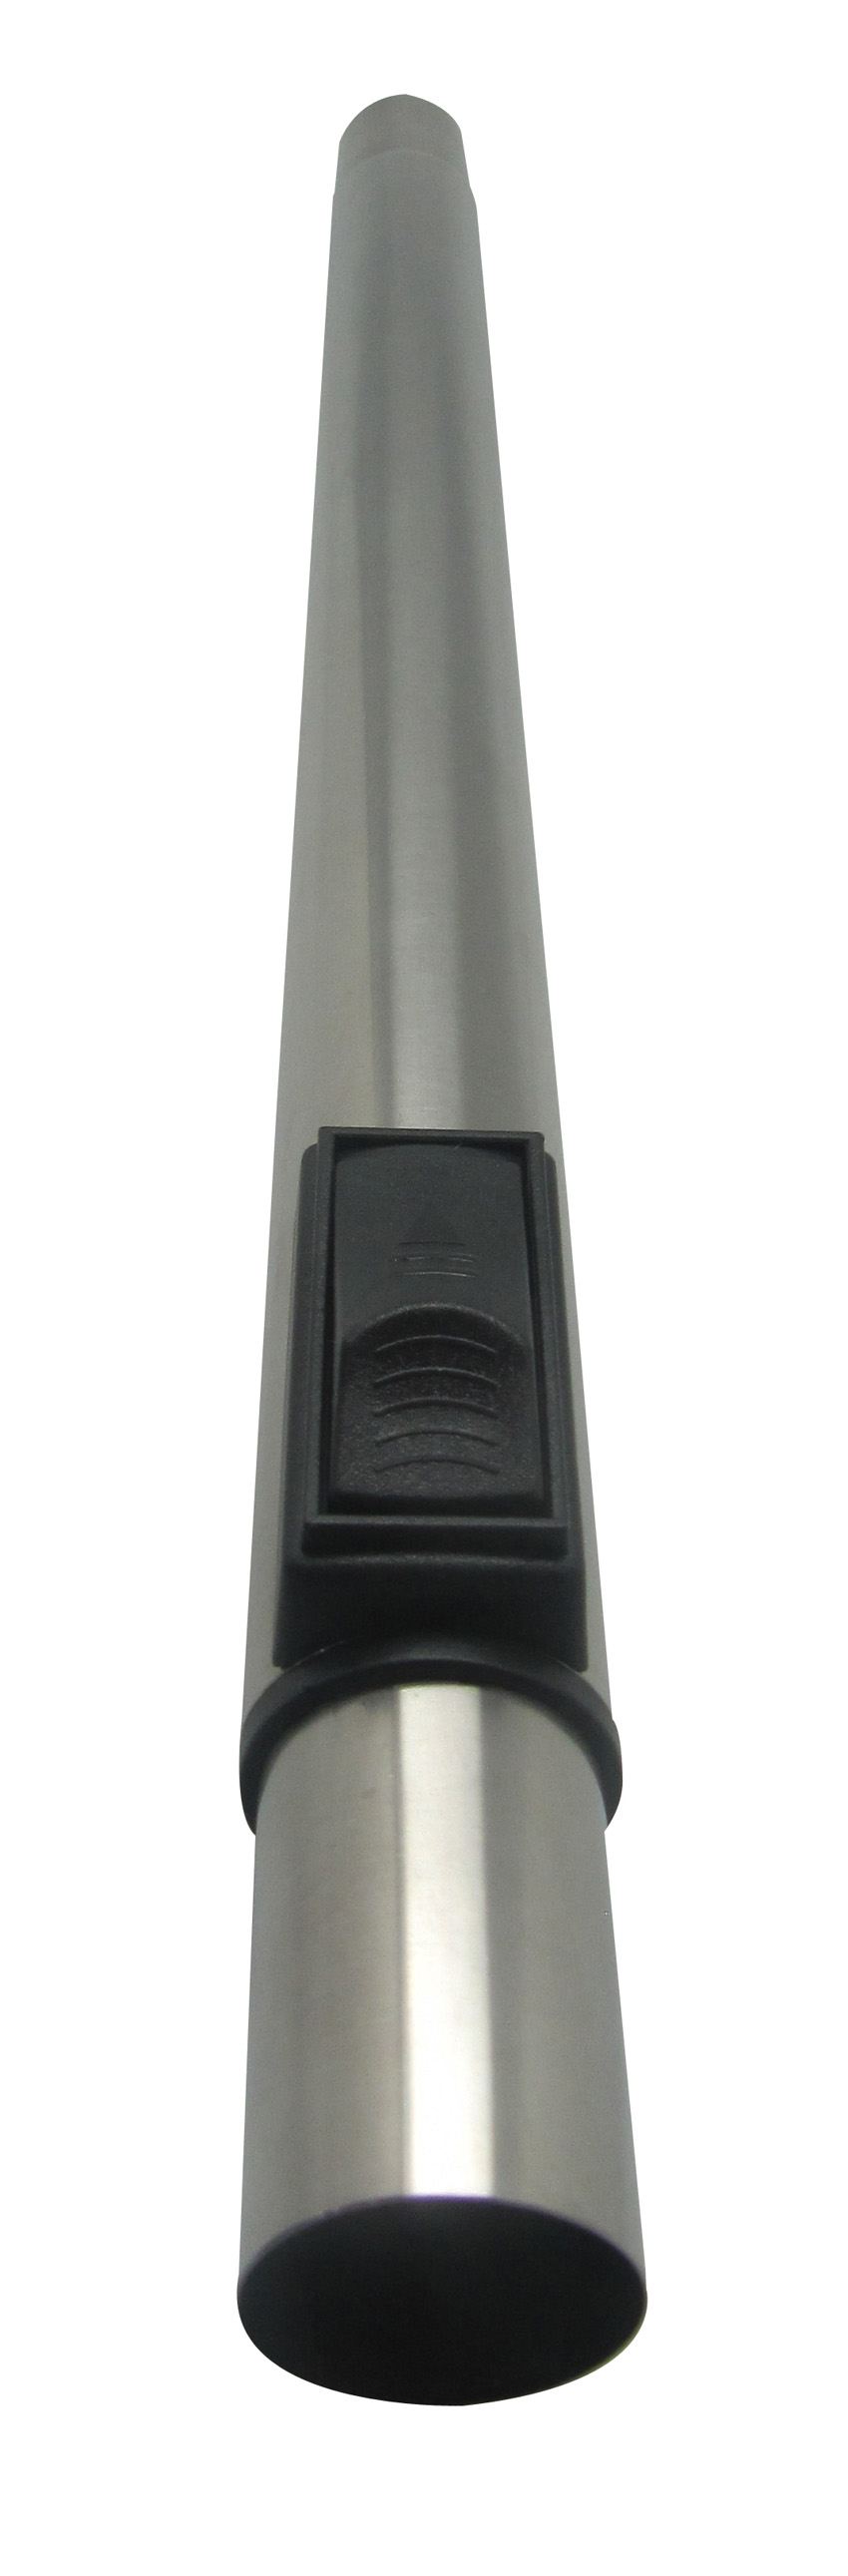 Tubo rígido telescópico aspirador Dirt Devil modelo M5051 -1 - DD5050019 - DIRT DEVIL